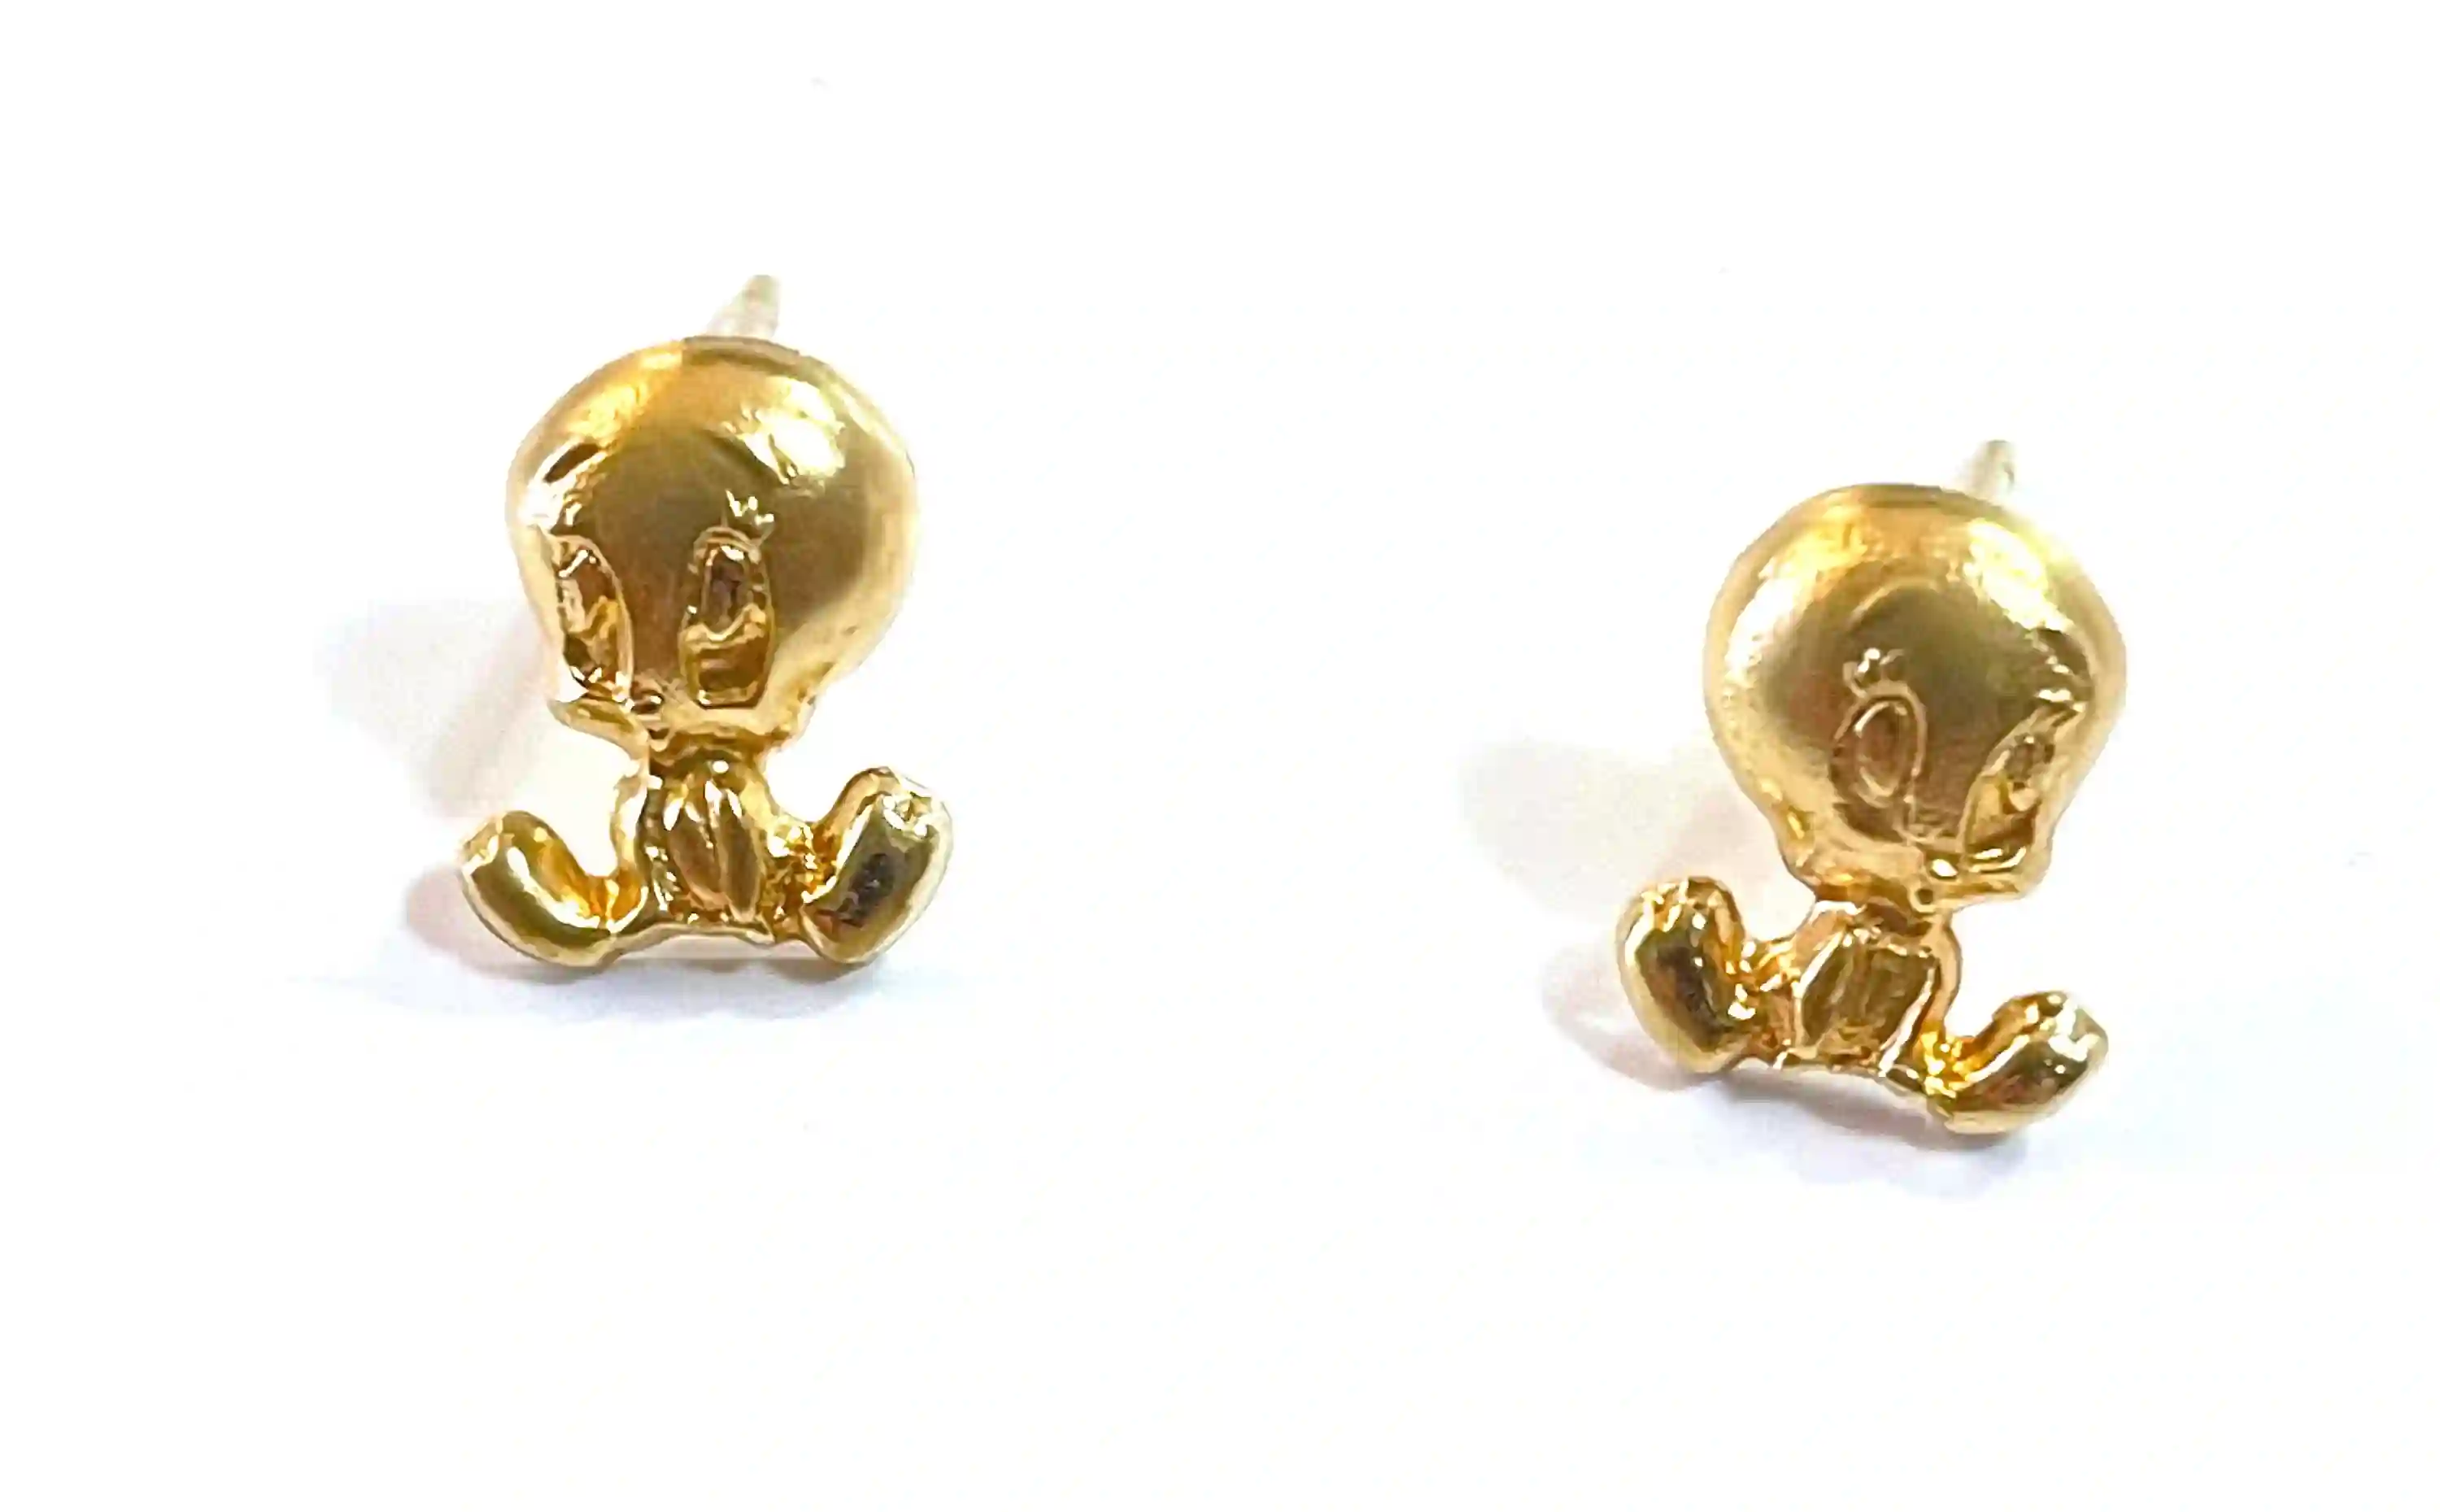 Original Vintage Earrings Tweety Bird Jewelry Gold -1st Birthday Earrings for her - Baby Shower Earrings - SOLID 18k Gold - Tweety Earrings 